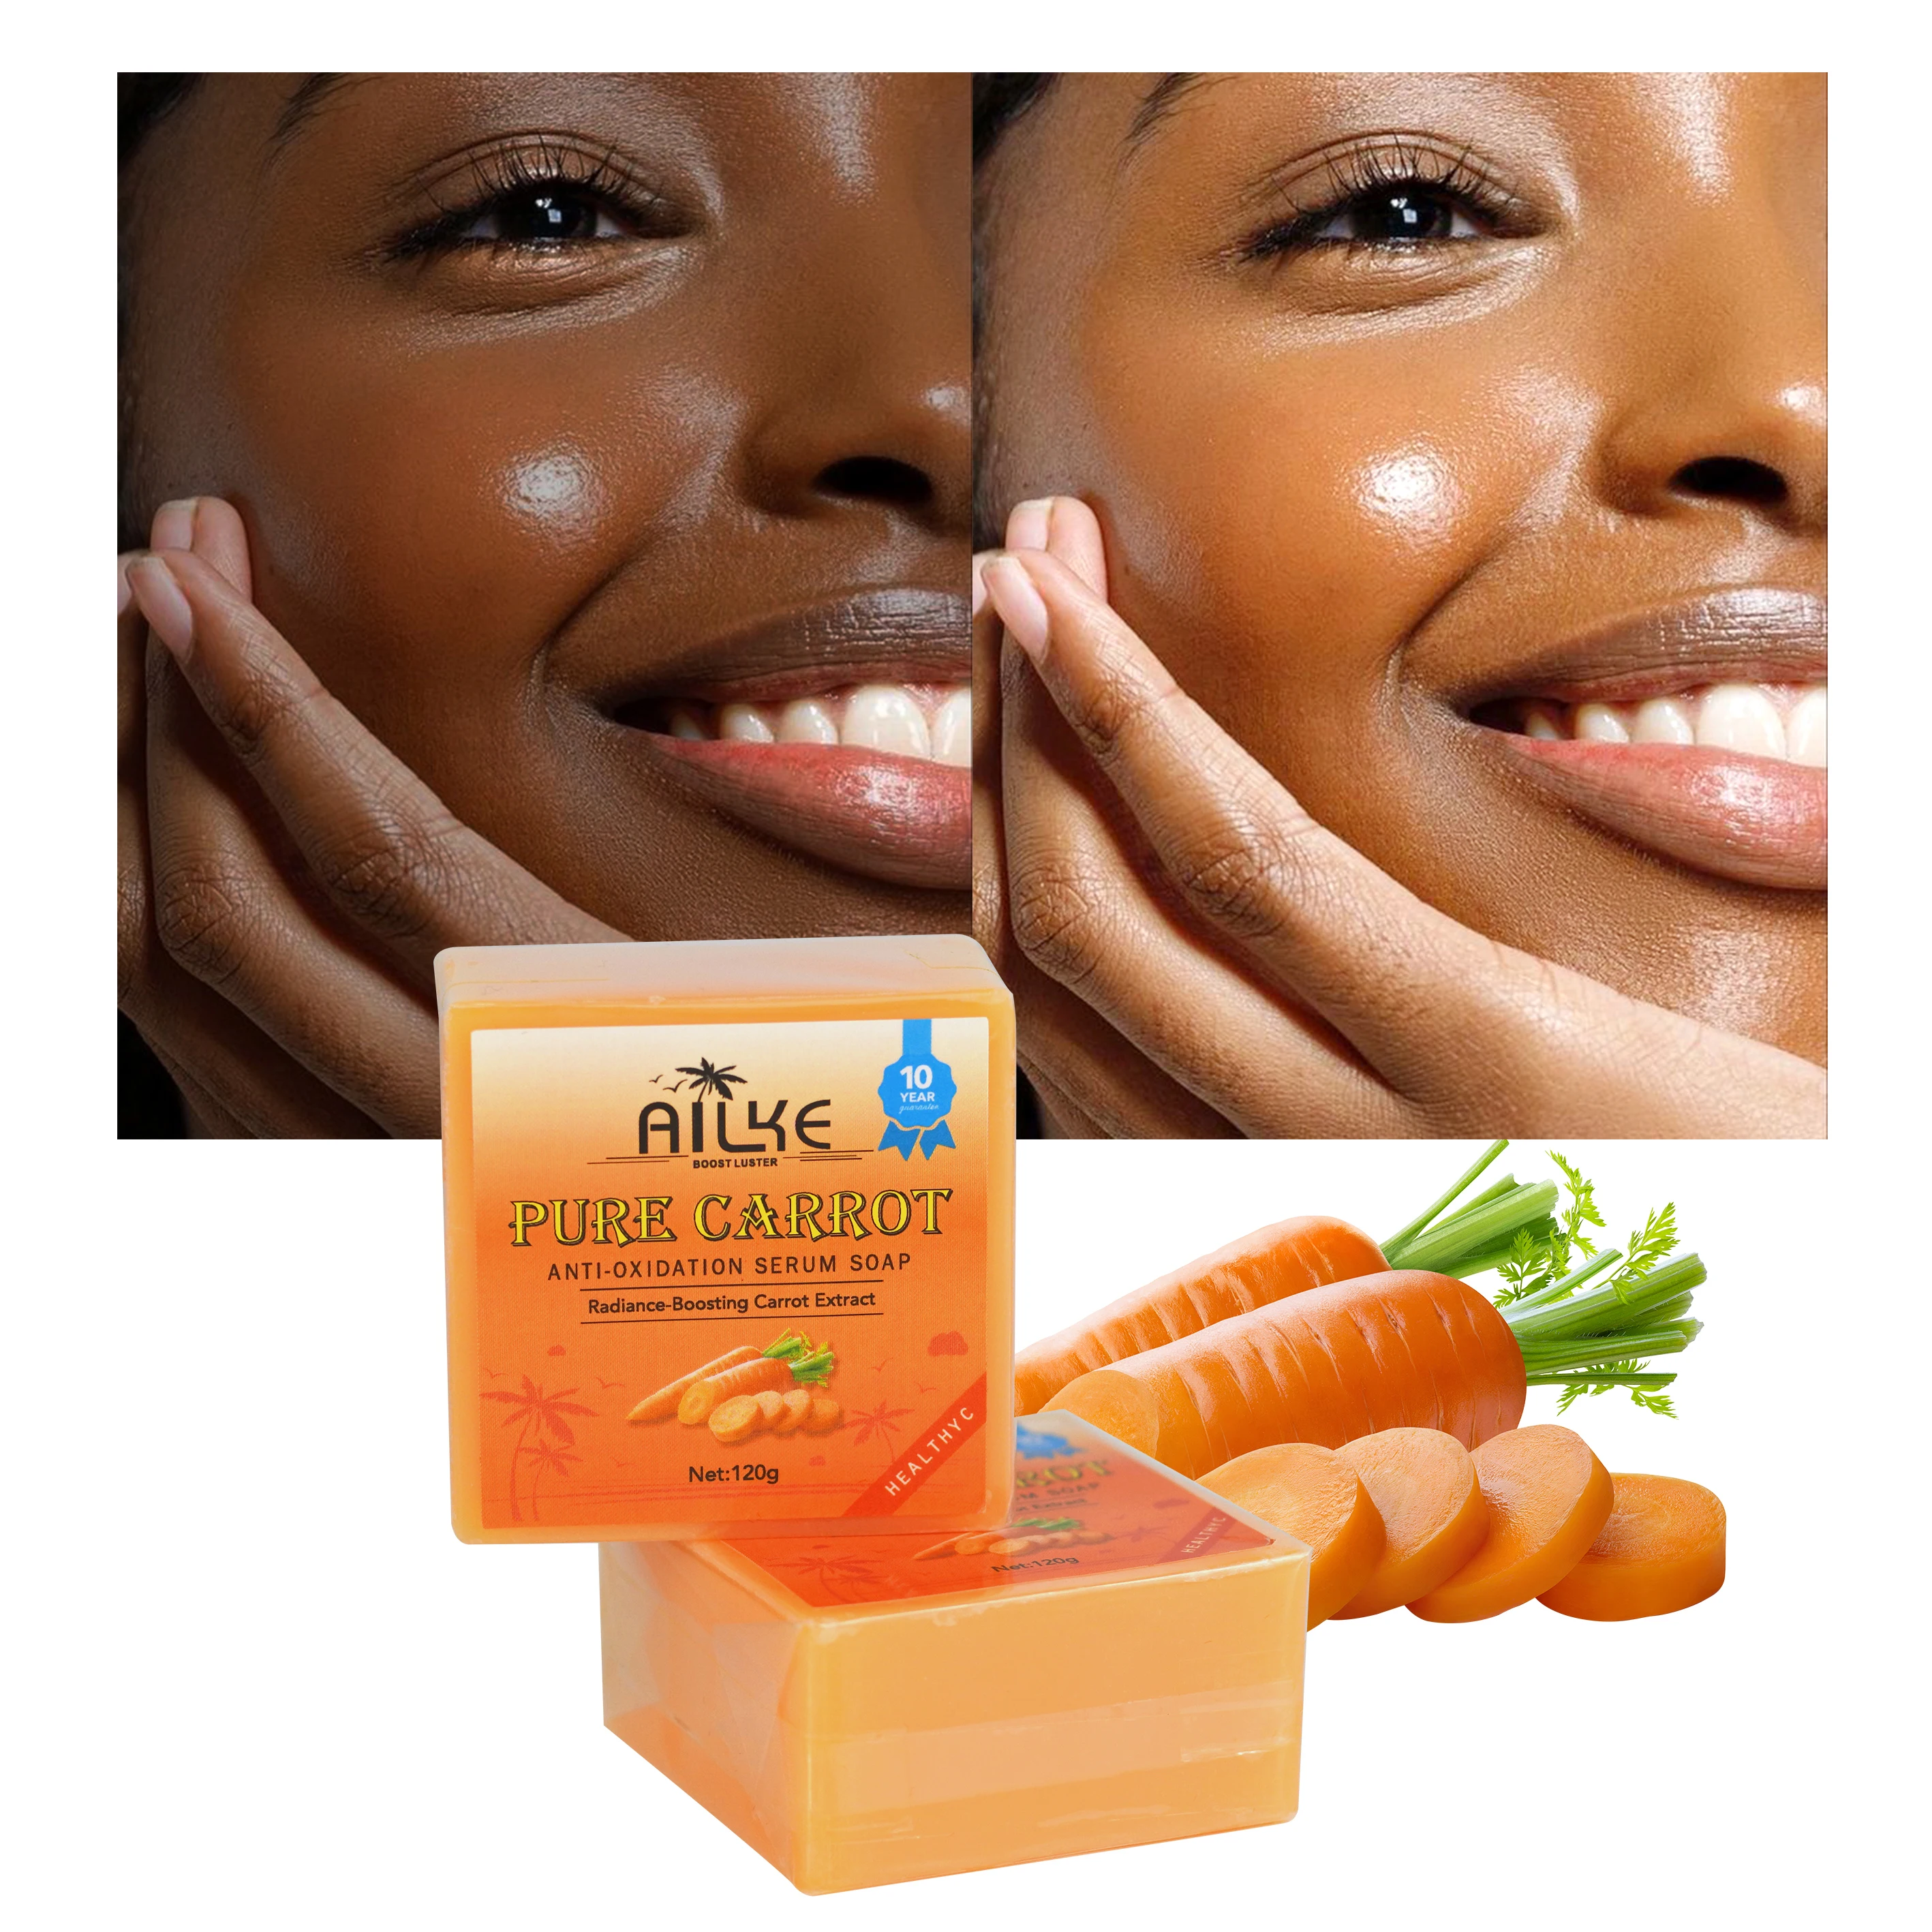 

AILKE Get Glowing Dark Black Skin Serum Lightening Private Label Face Handmade Soap Vitamin E Moisturizing Carrot Soap